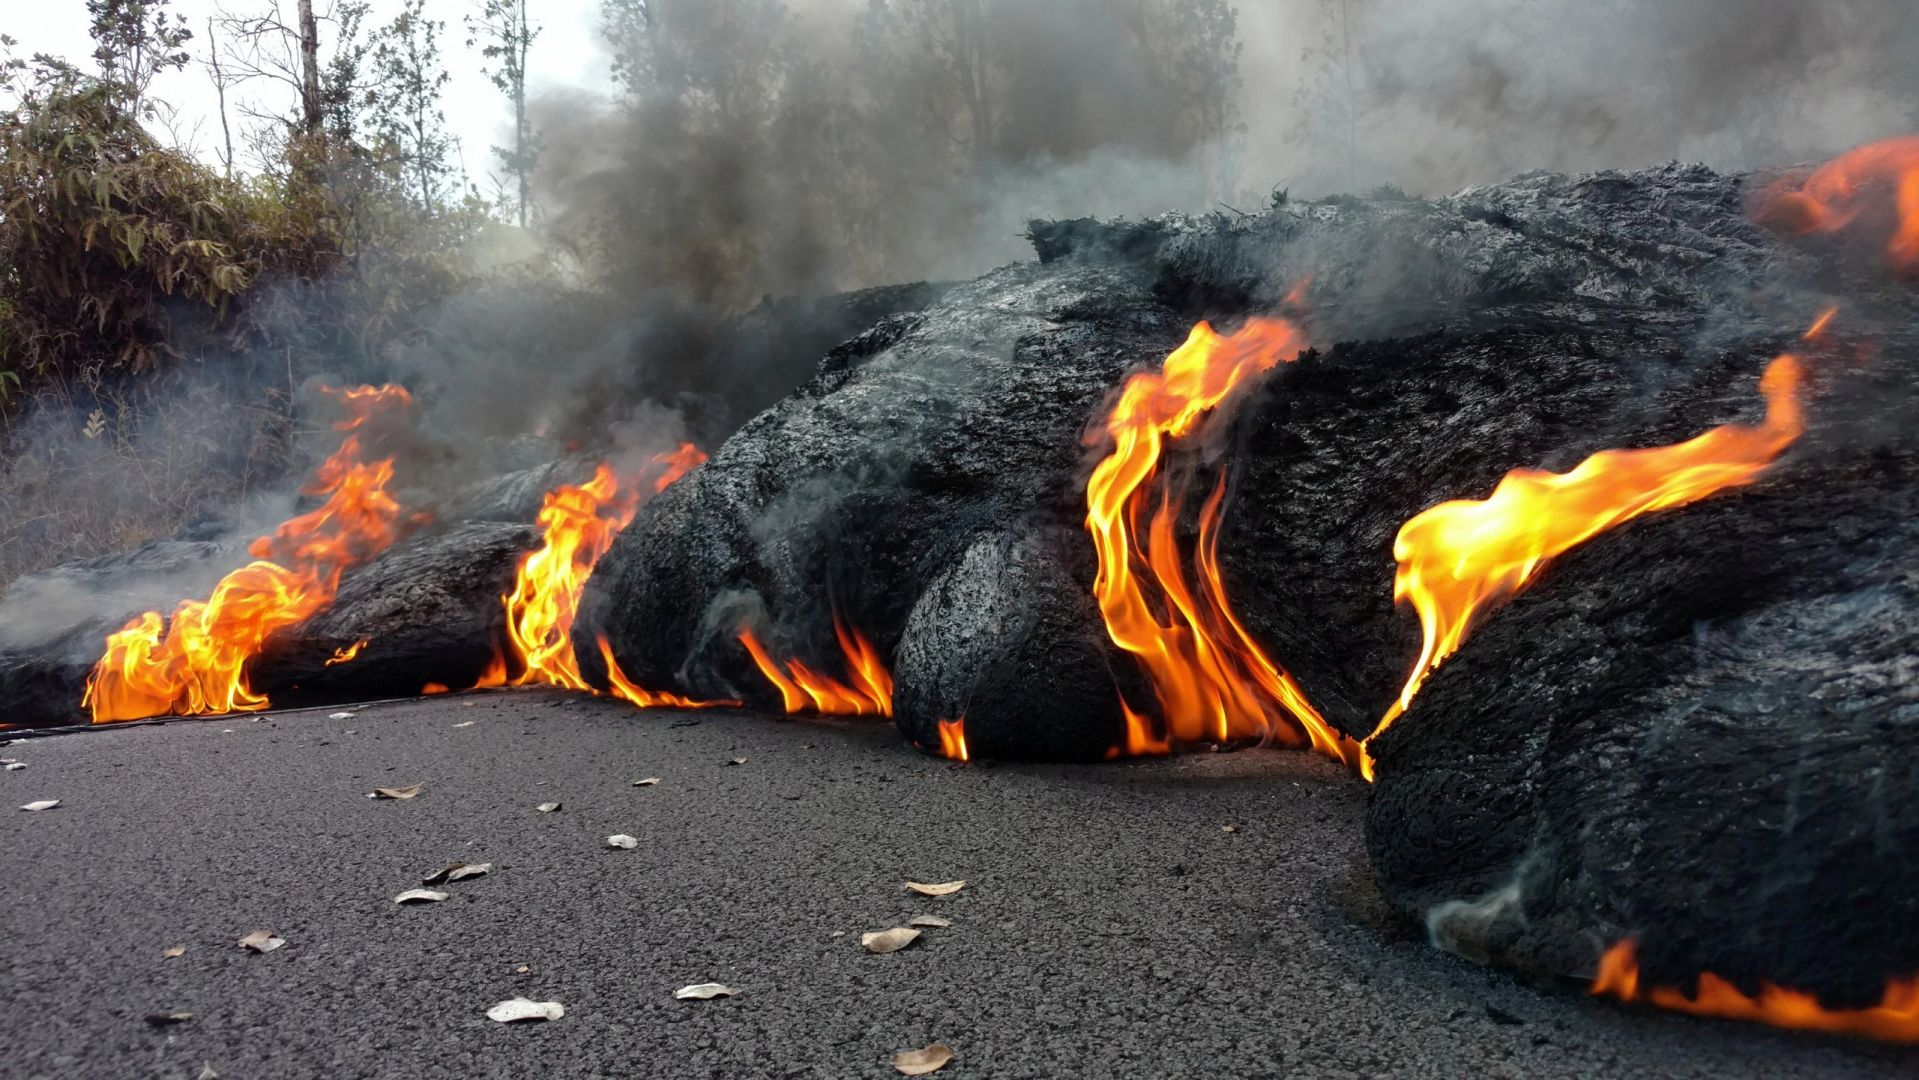 General 1919x1080 nature volcano Hawaii Kilauea lava volcanic eruption eruption road fire smoke plants leaves asphalt